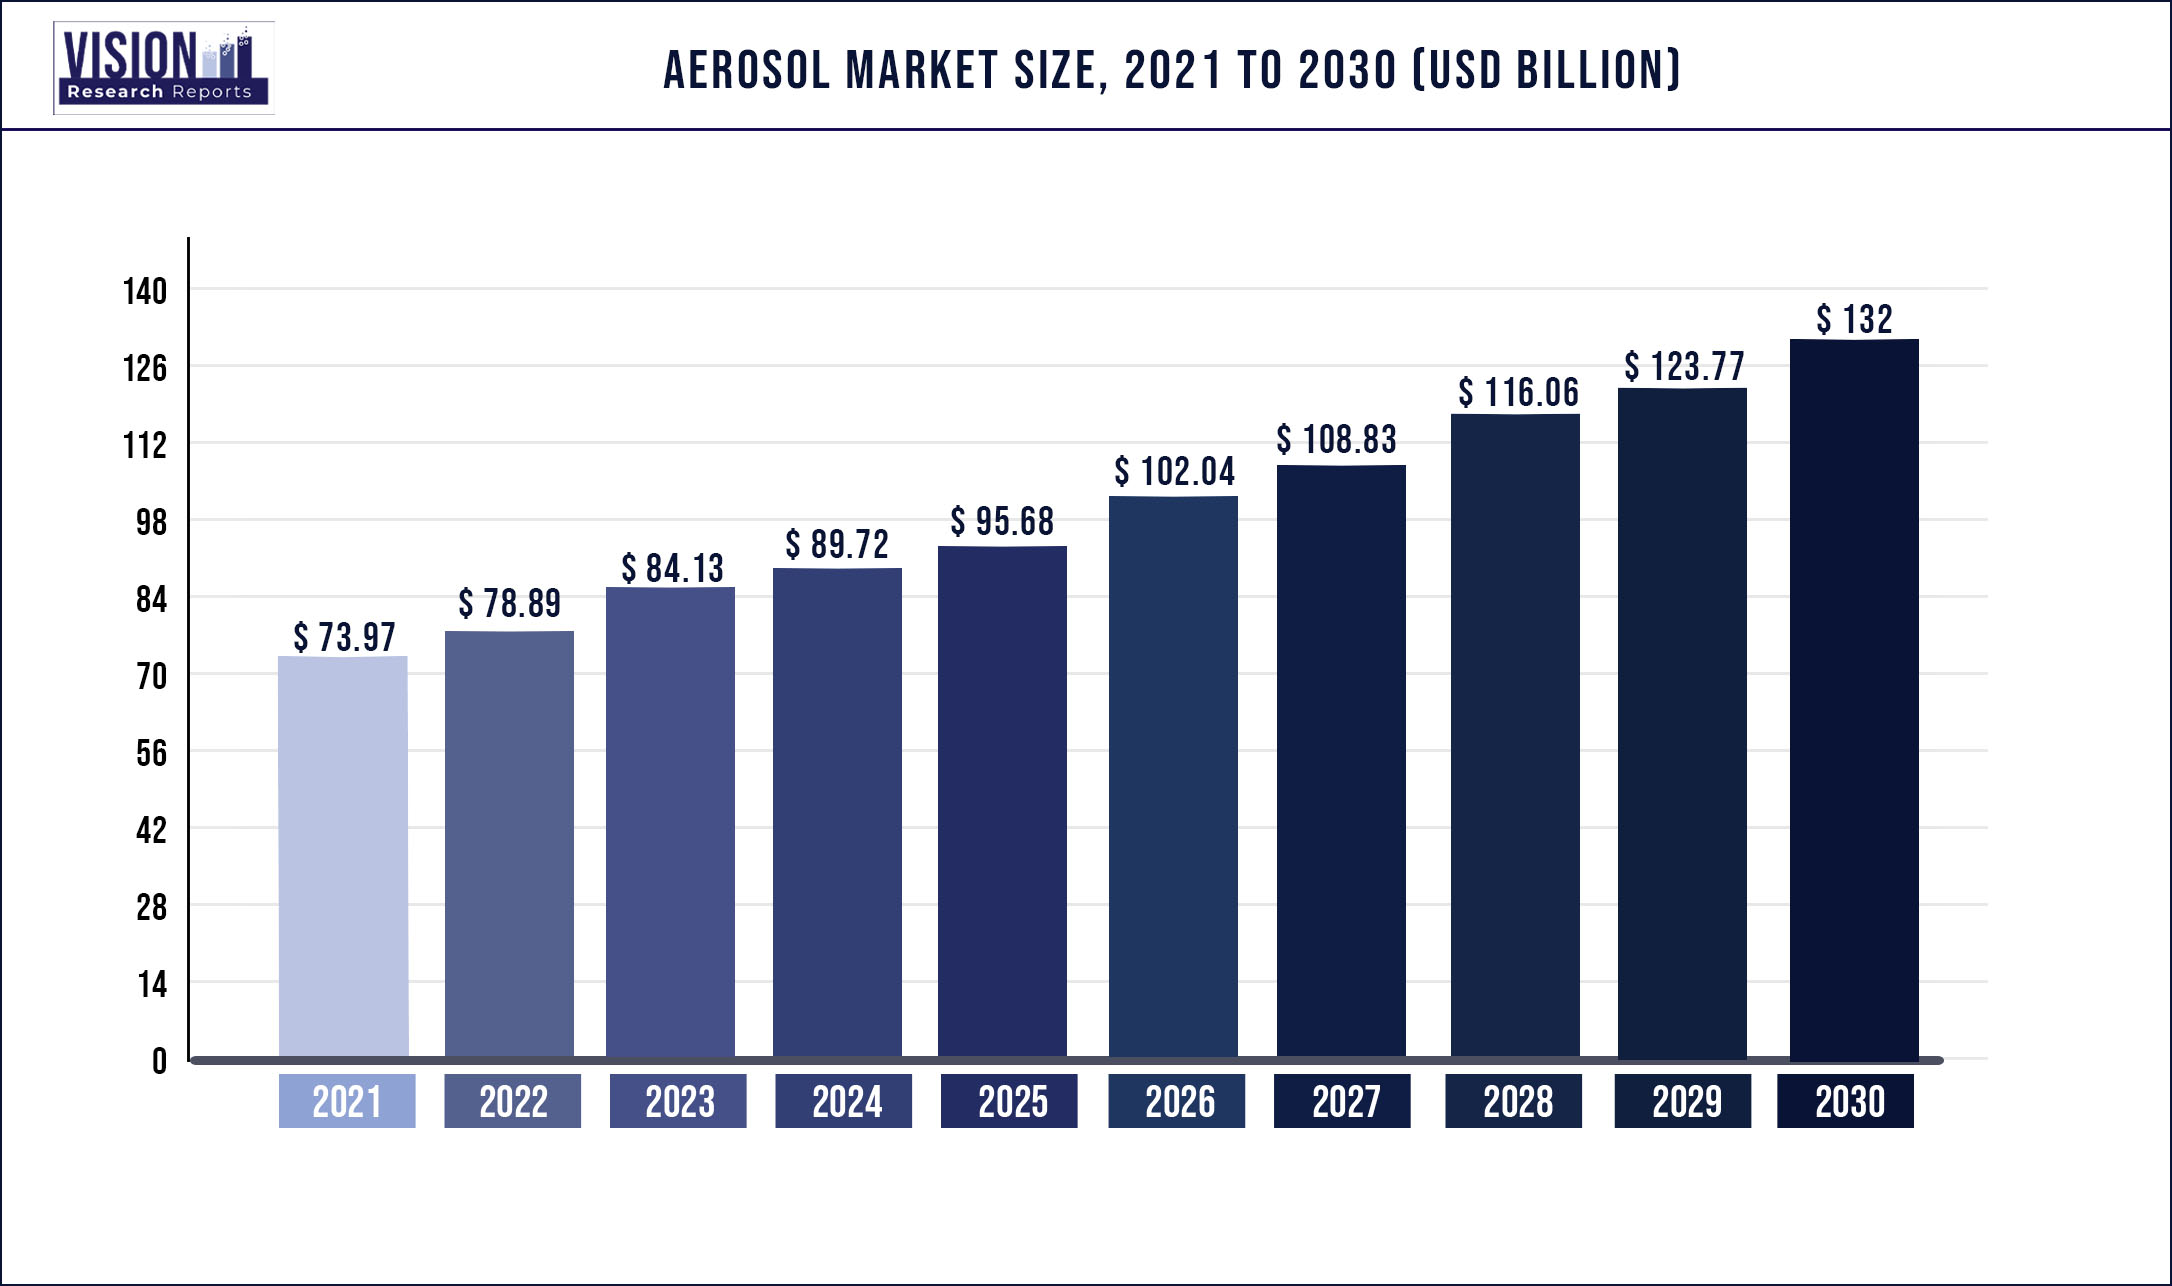 Aerosol Market Size 2021 to 2030